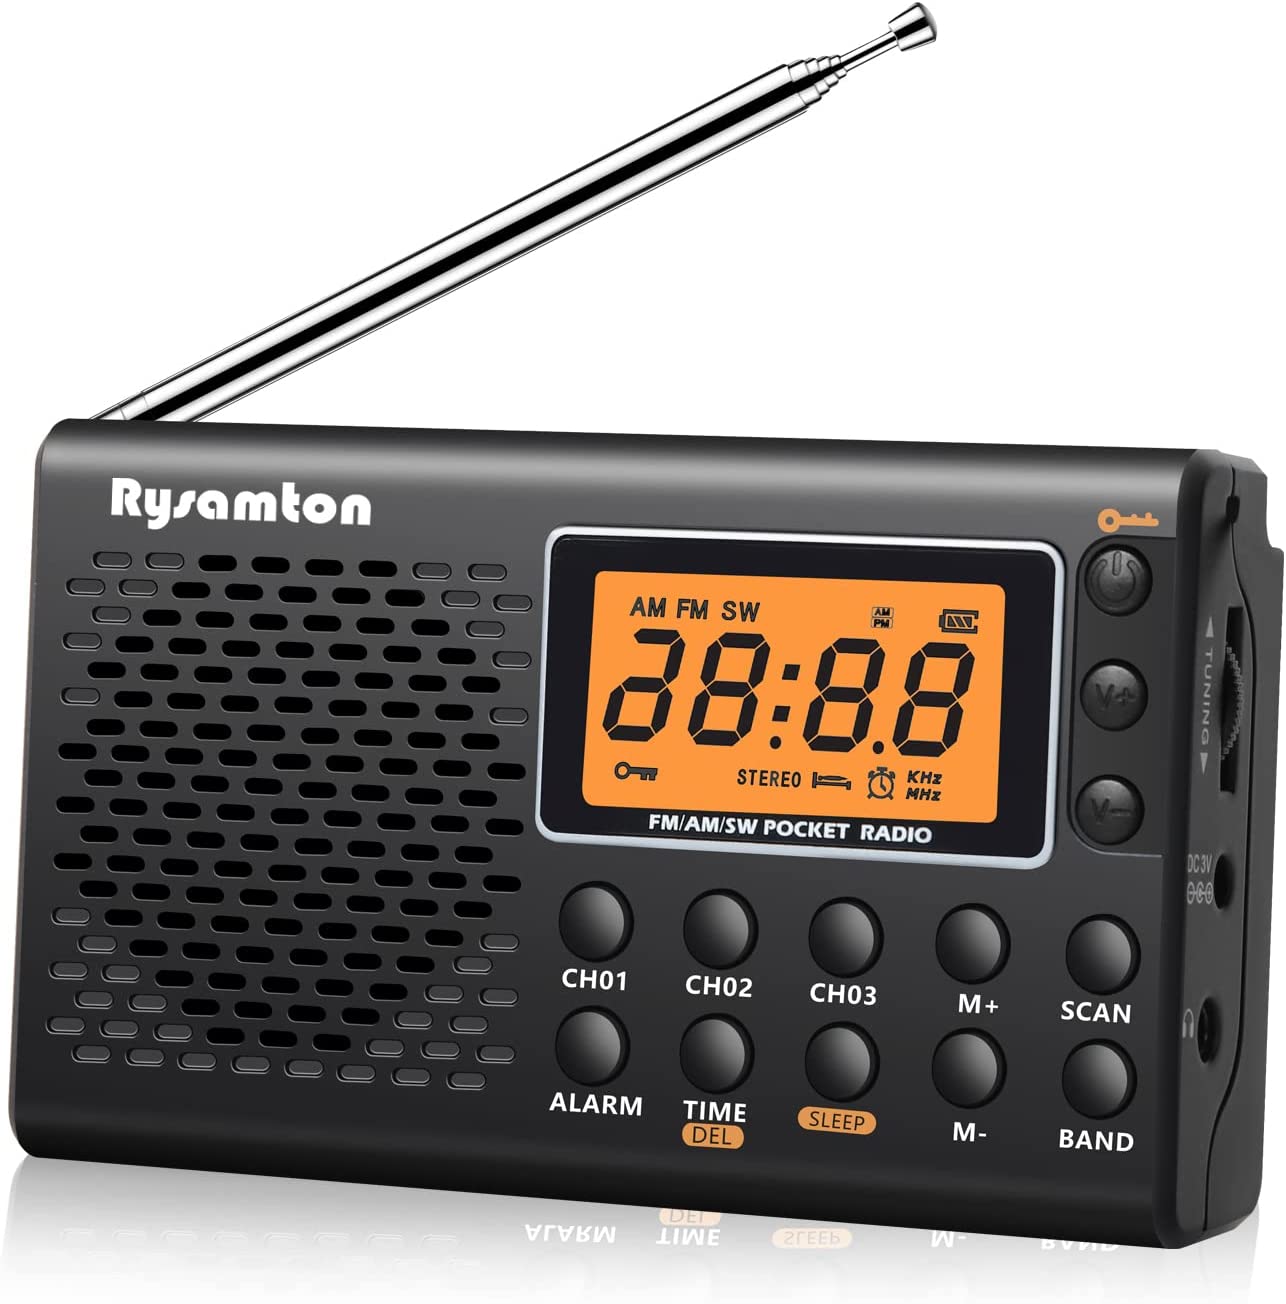 Rysamton Portable AM/FM/Shortwave Radio, Batteries Operated Pocket Radios, Large Digital Display, Clock Radio with Alarm and Sleep Function, Earphone Included